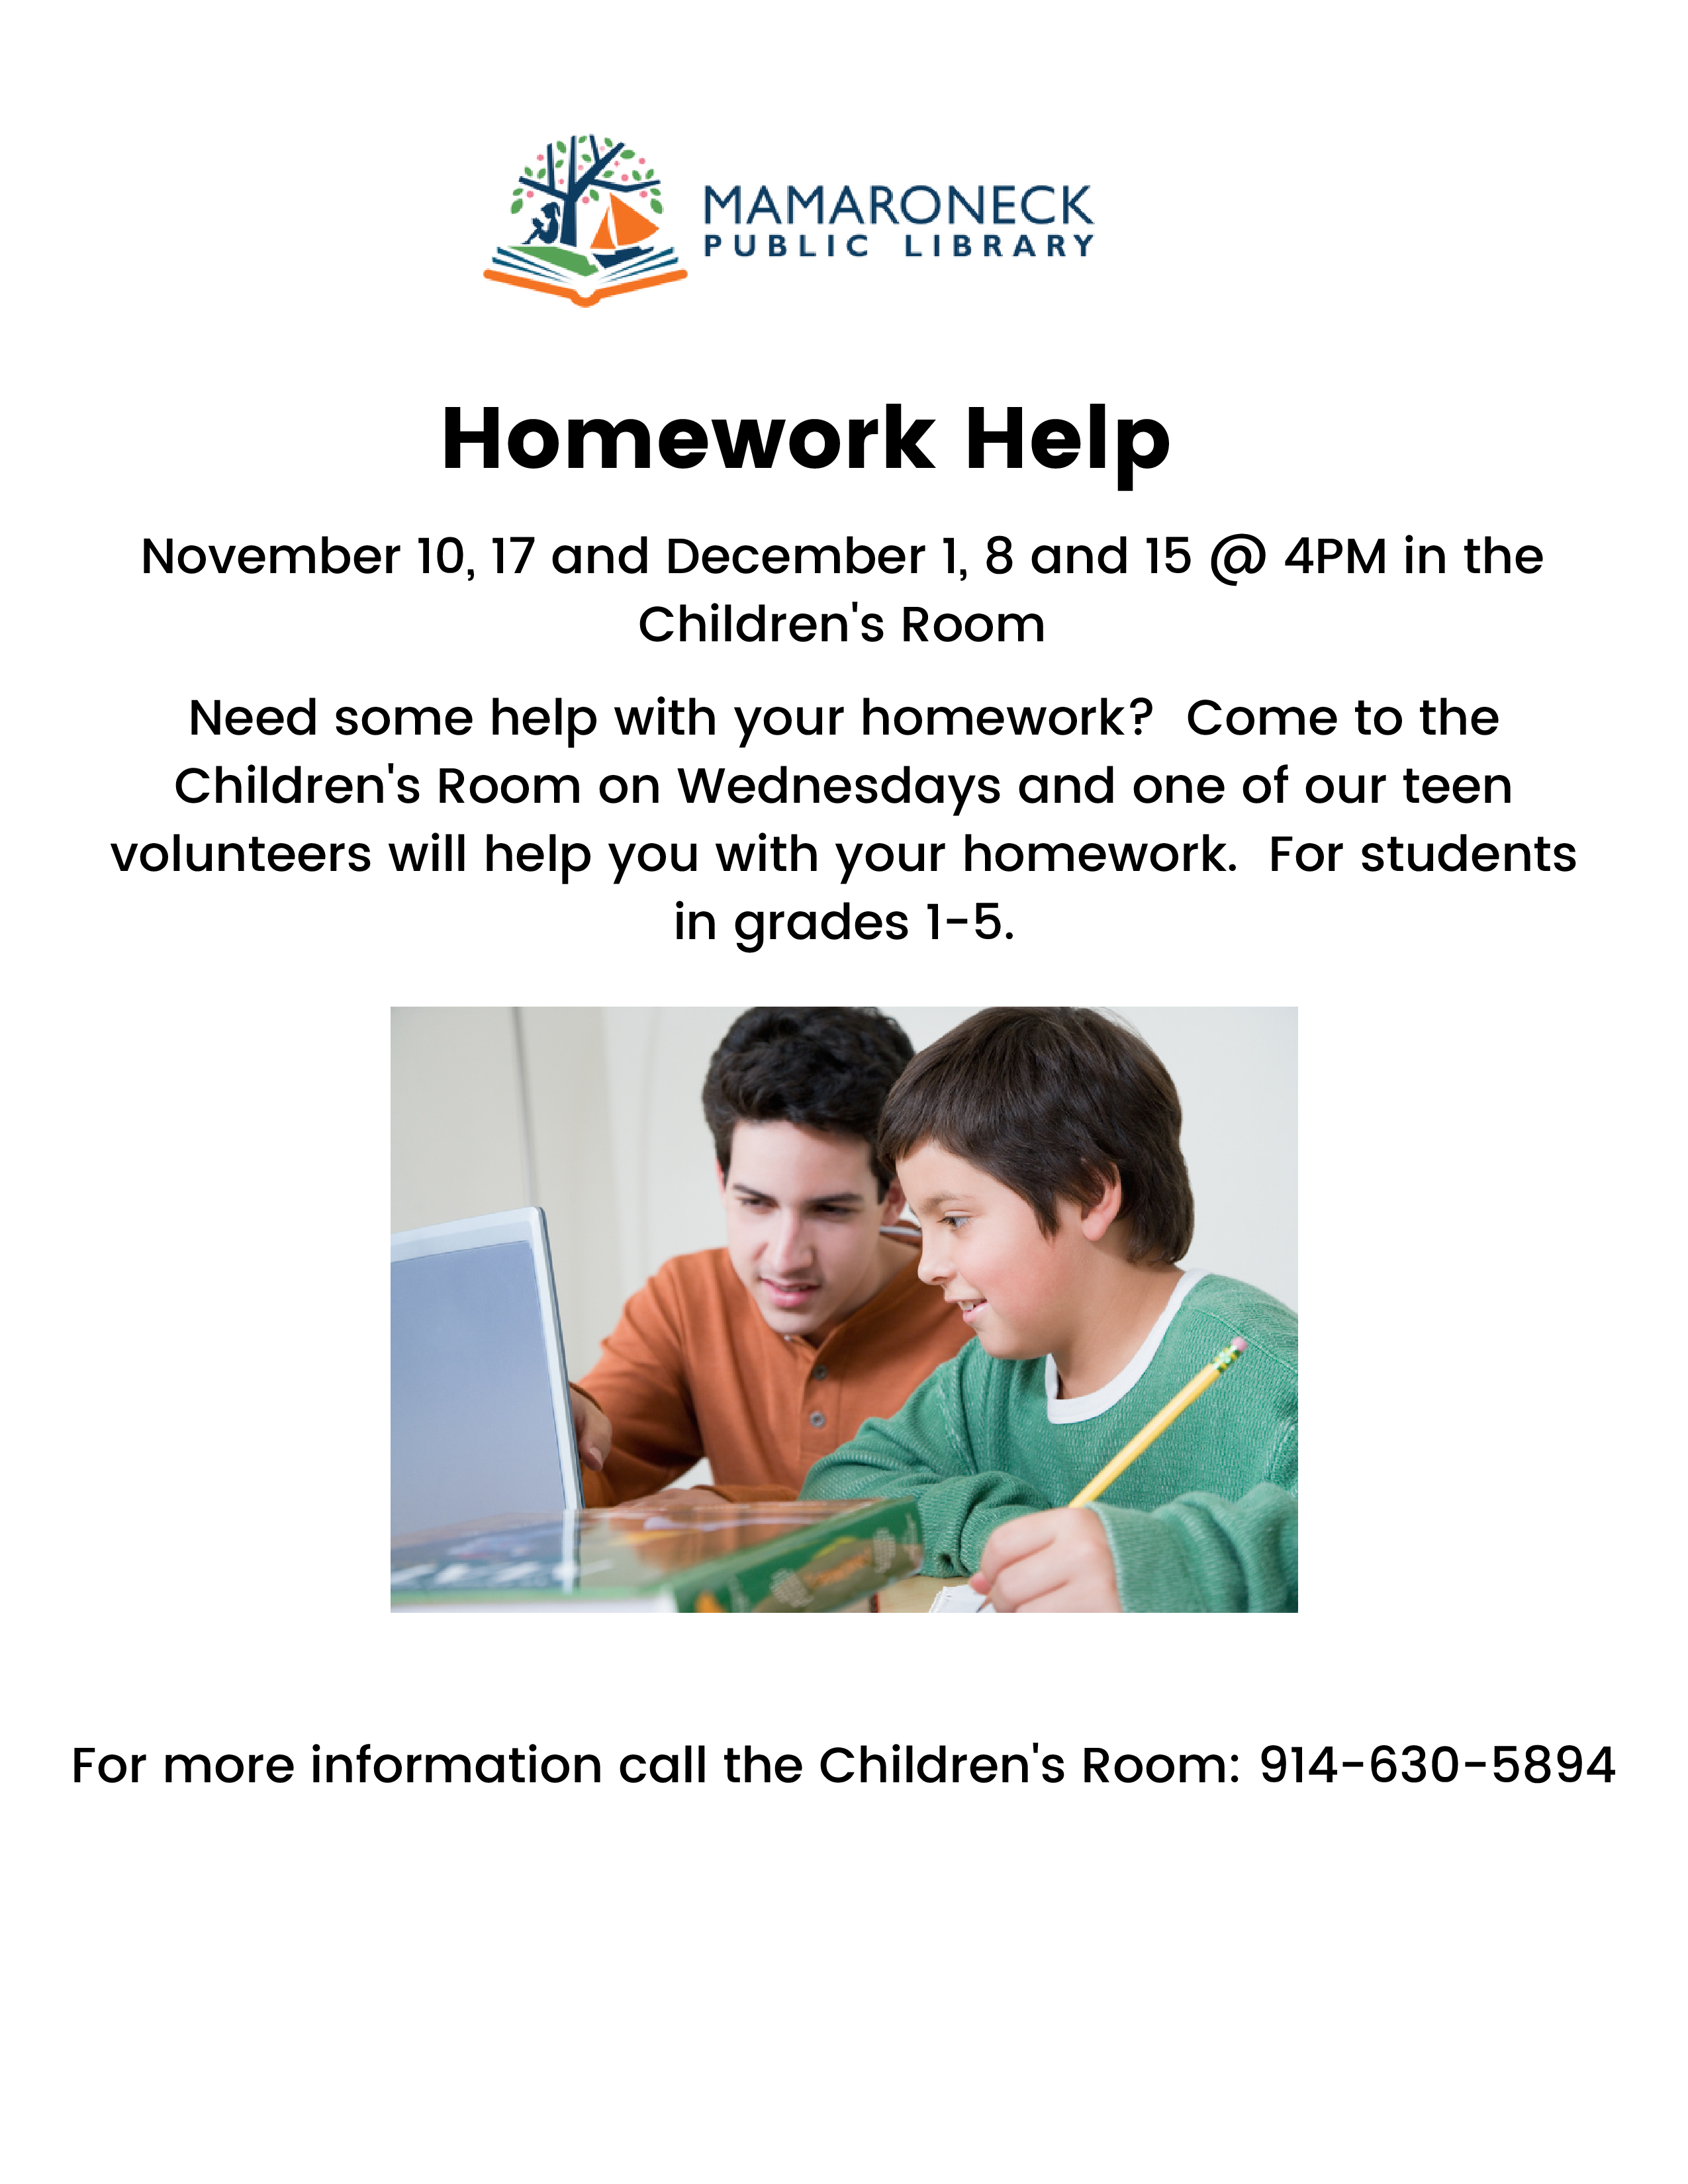 Homework Help for children grades 1-5